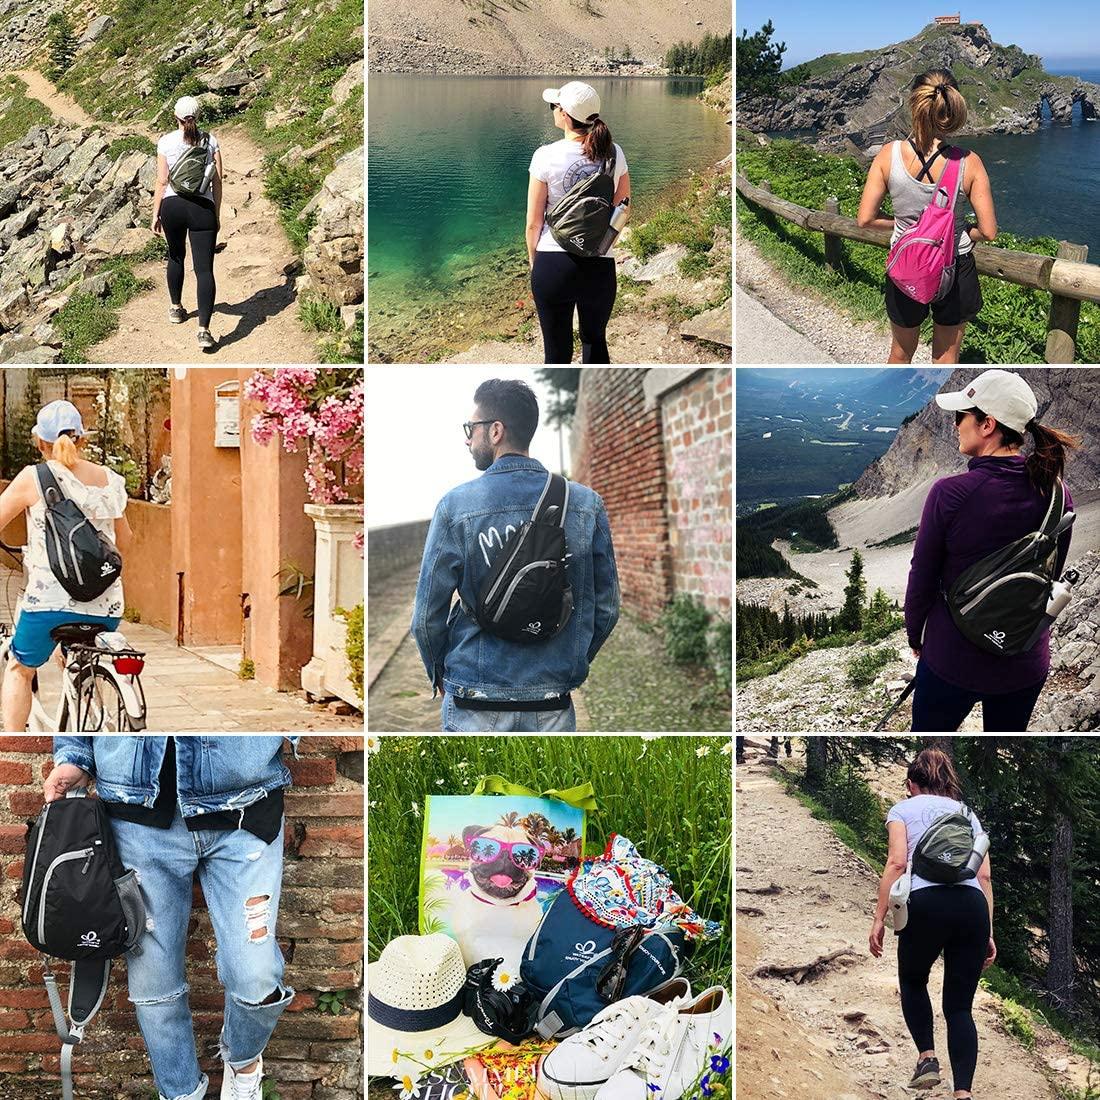 WATERFLY Crossbody Sling Backpack Sling Bag Travel Hiking Chest Bag Daypack  Navy